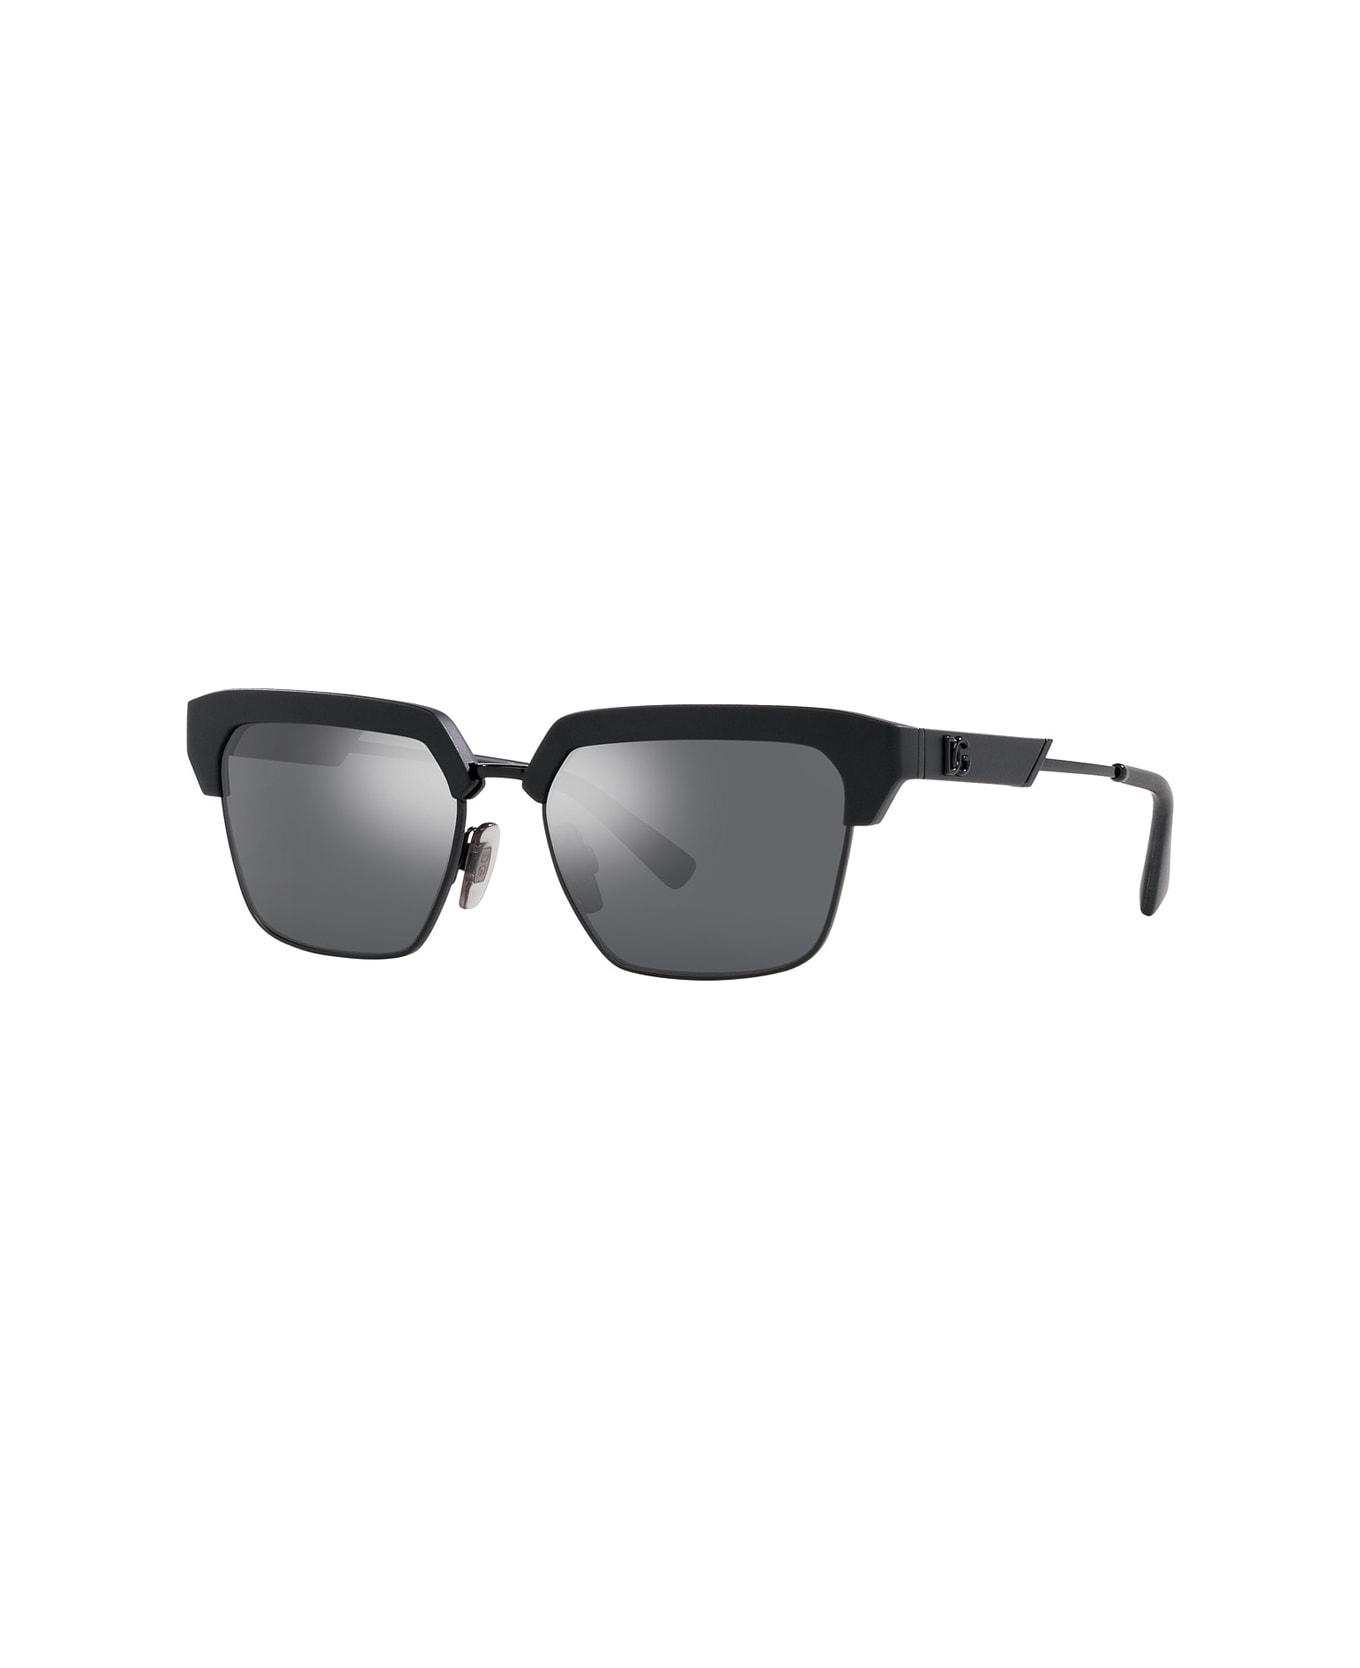 Dolce & Gabbana Eyewear Dg6185 25256g Sunglasses - Nero サングラス